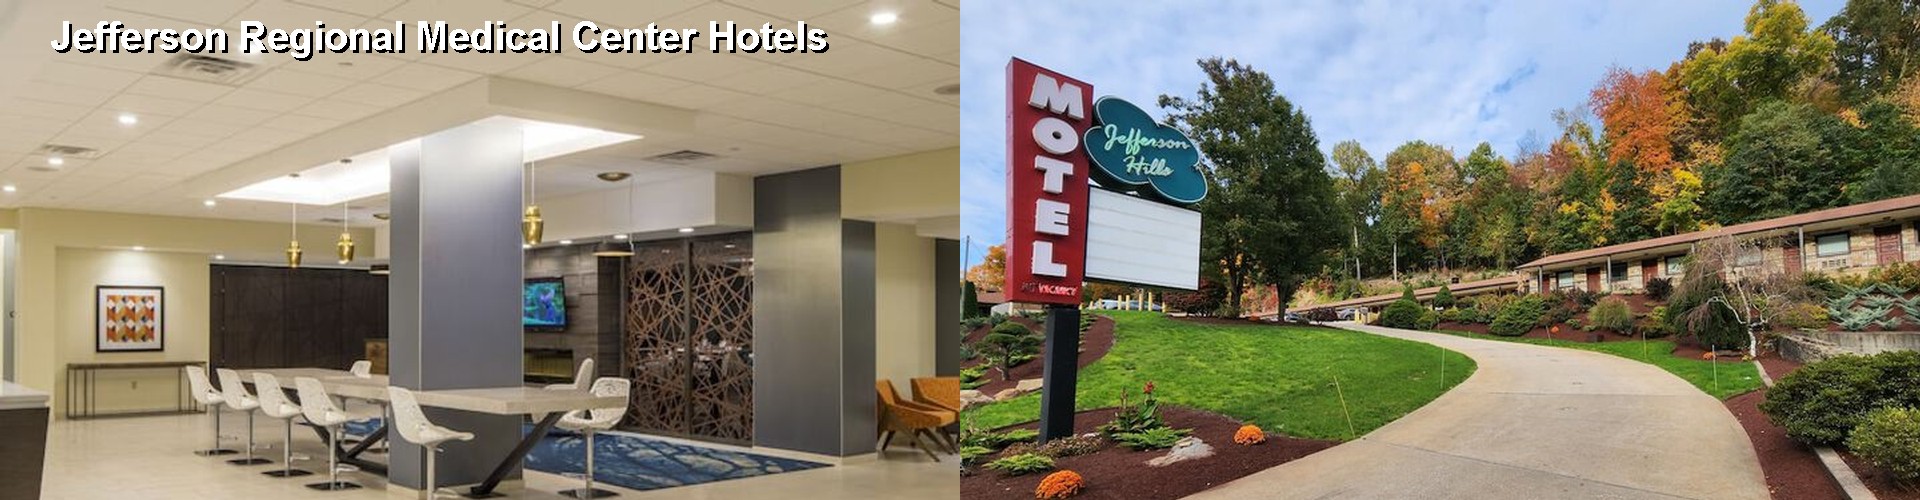 5 Best Hotels near Jefferson Regional Medical Center